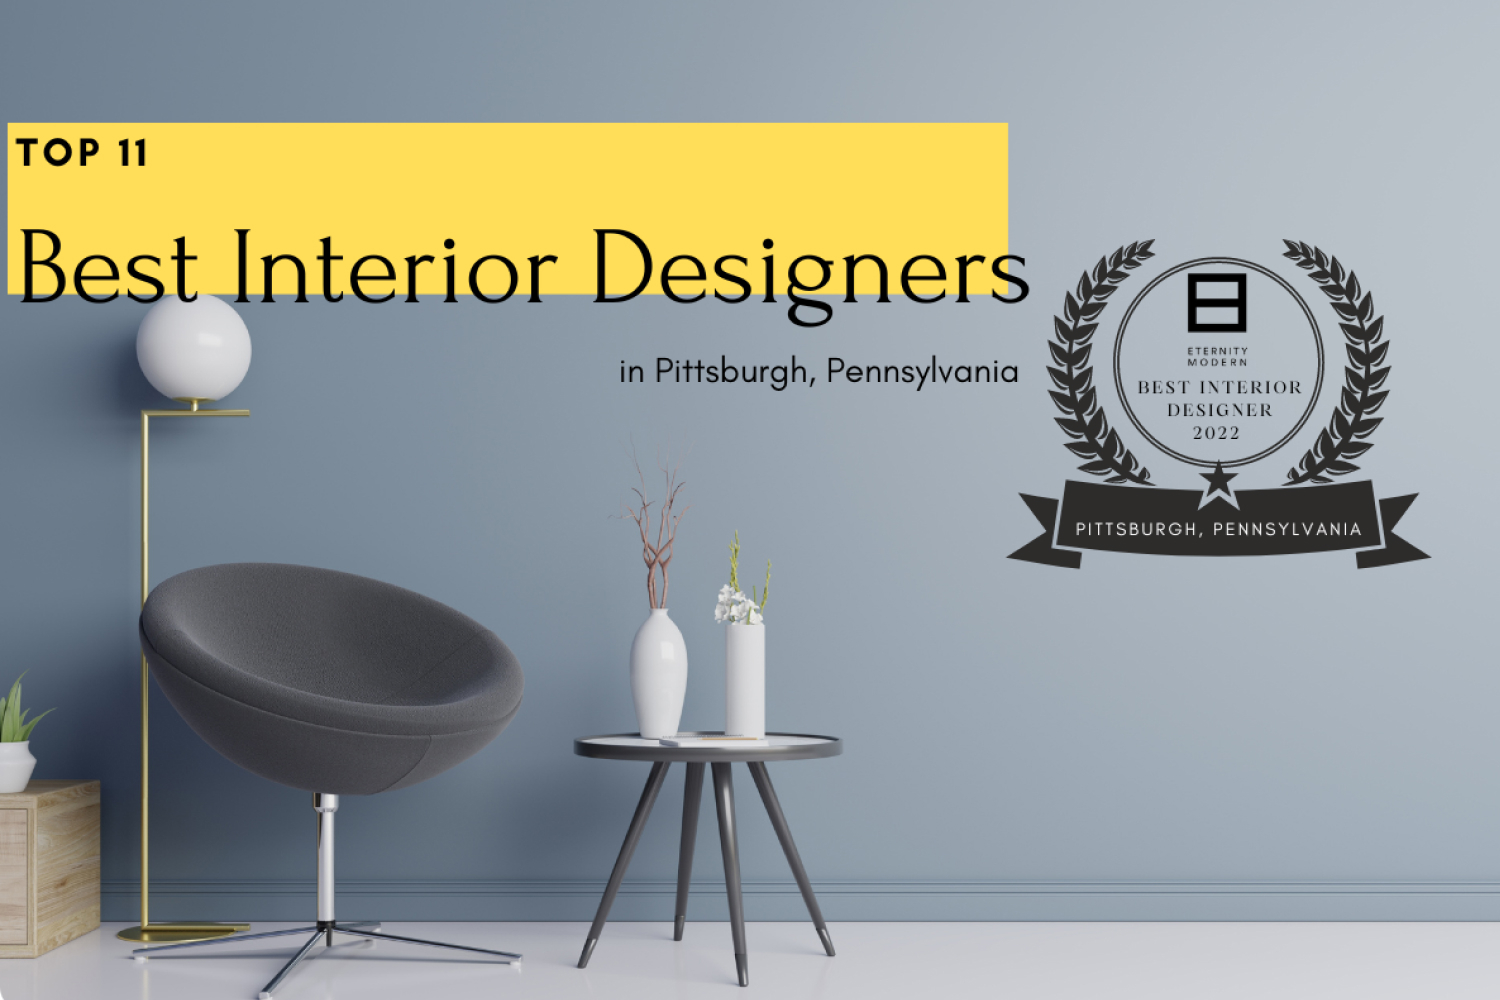 Top 11 Best Interior Designers in Pittsburgh, Pennsylvania